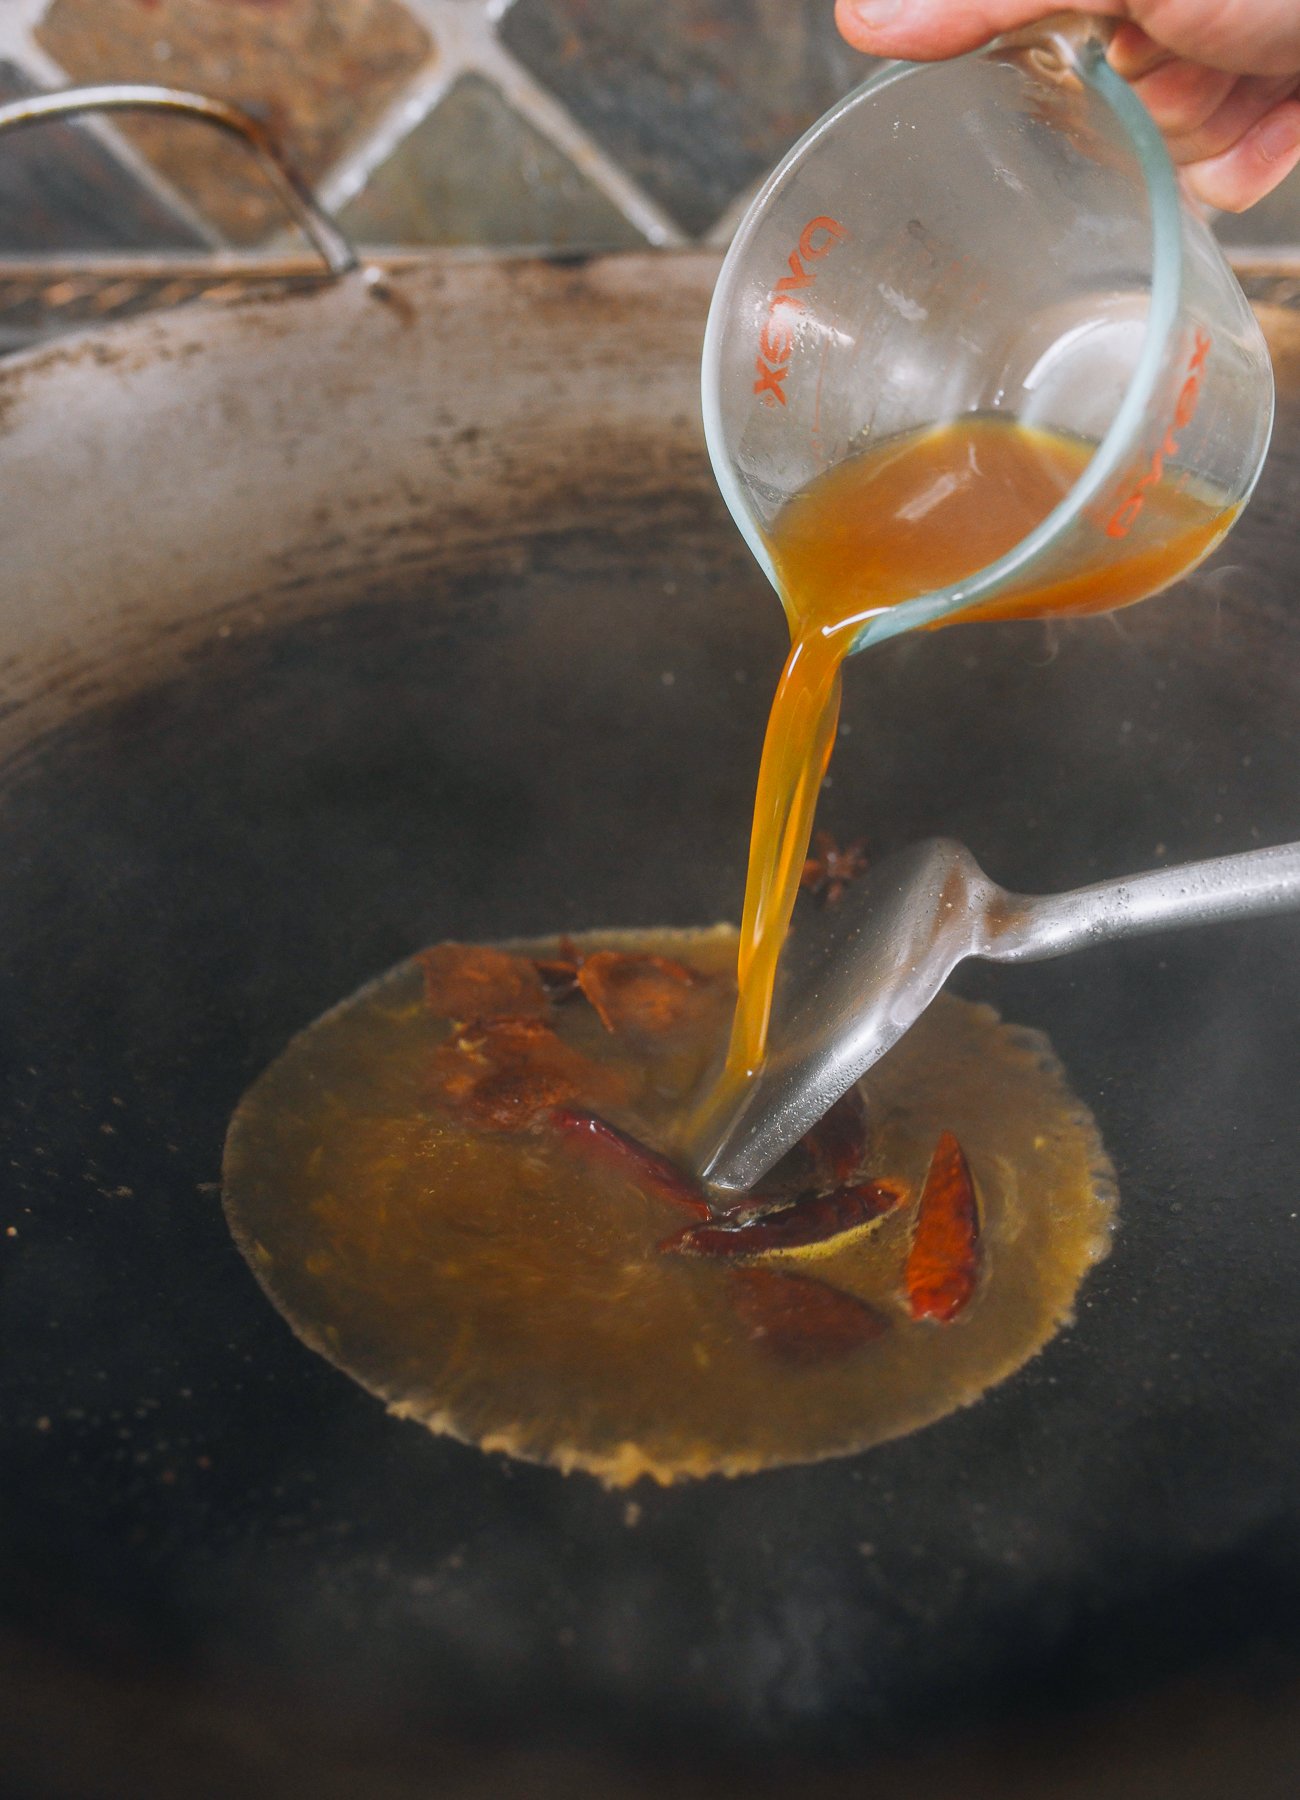 agregando la mezcla de salsa al wok